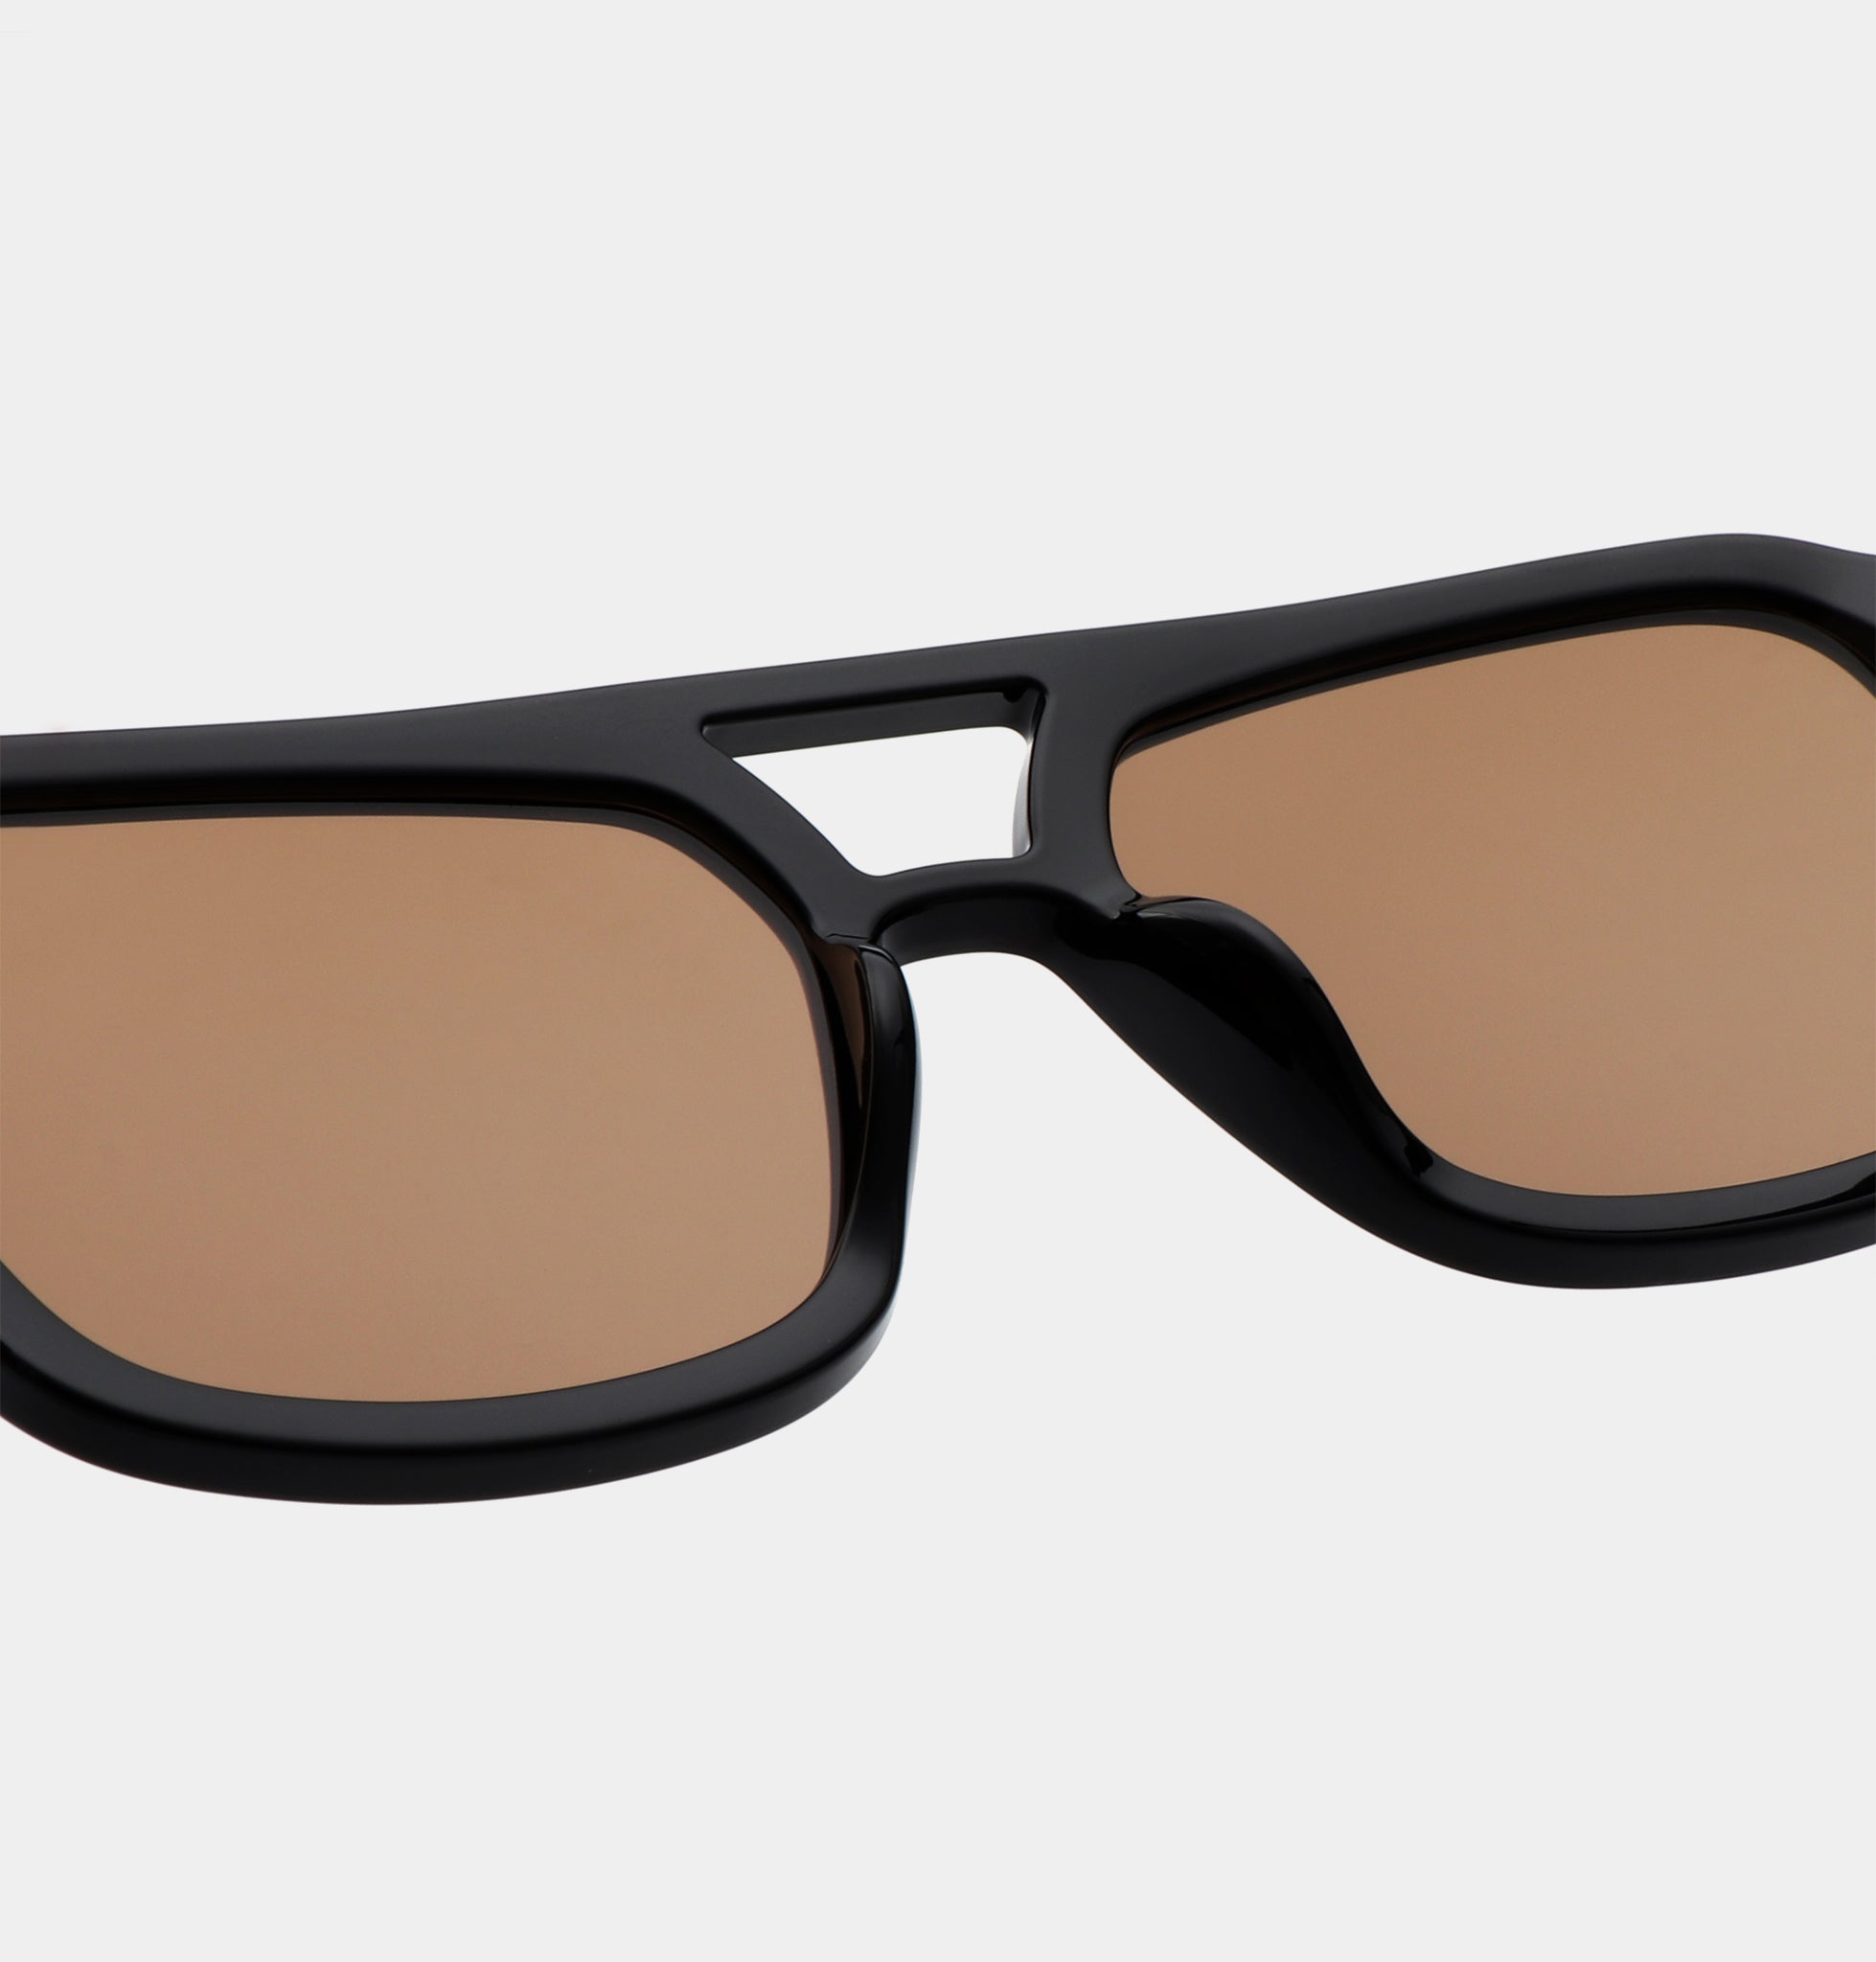 Kaya sunglasses in black